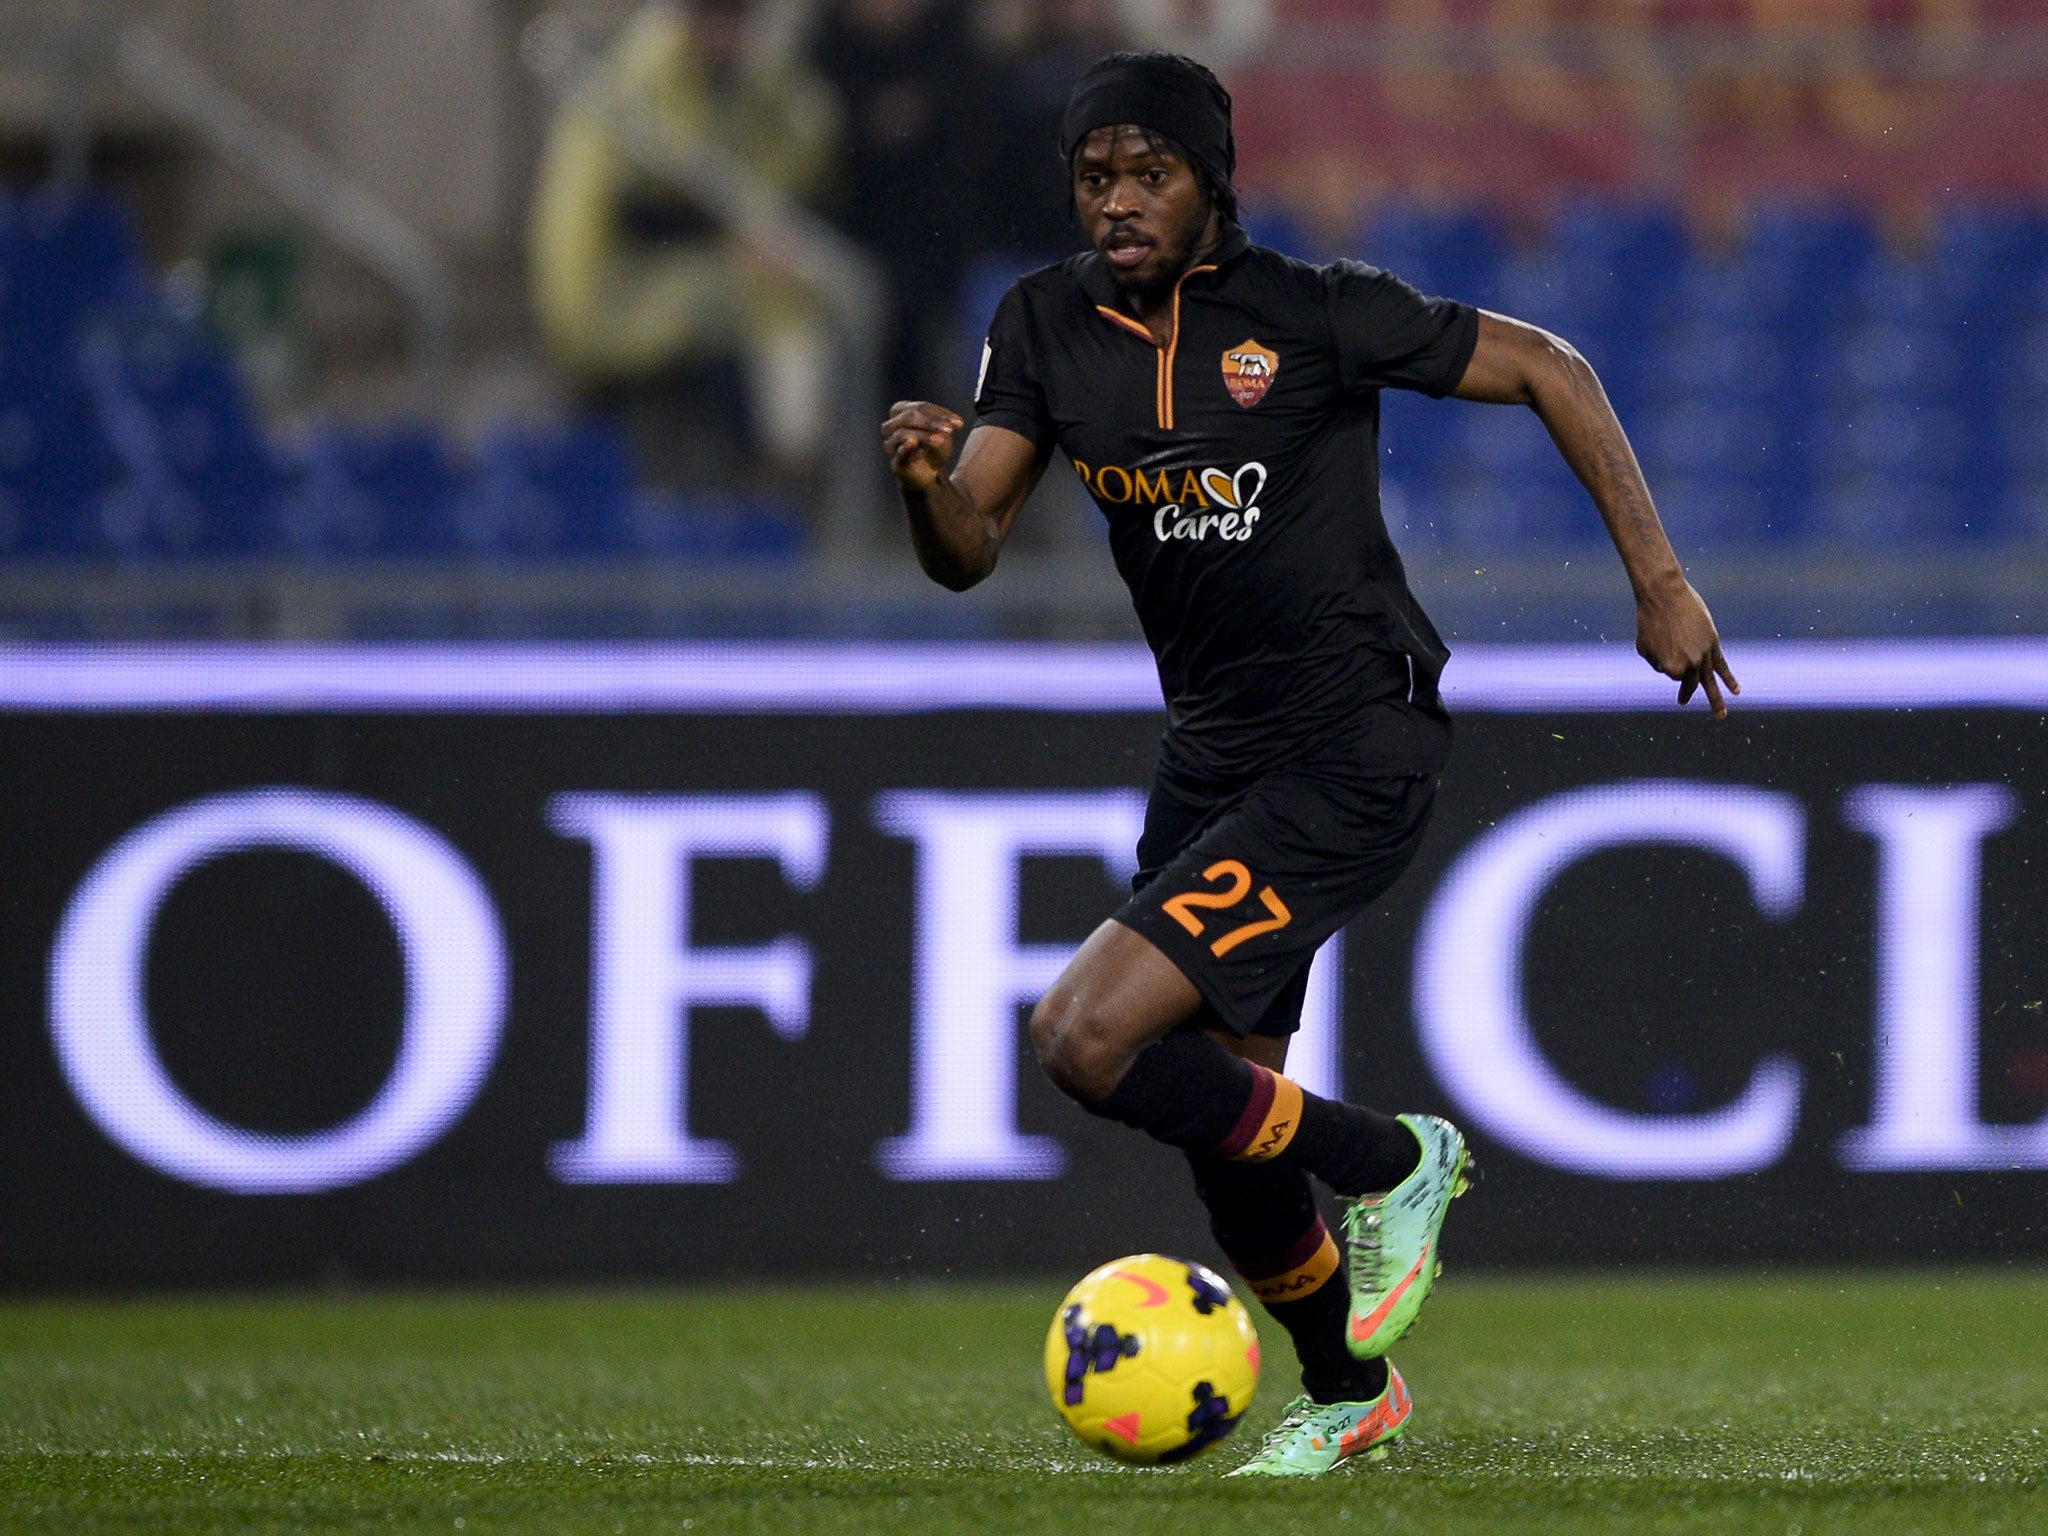 Roma forward Gervinho scored twice in the 3-2 win over Napoli